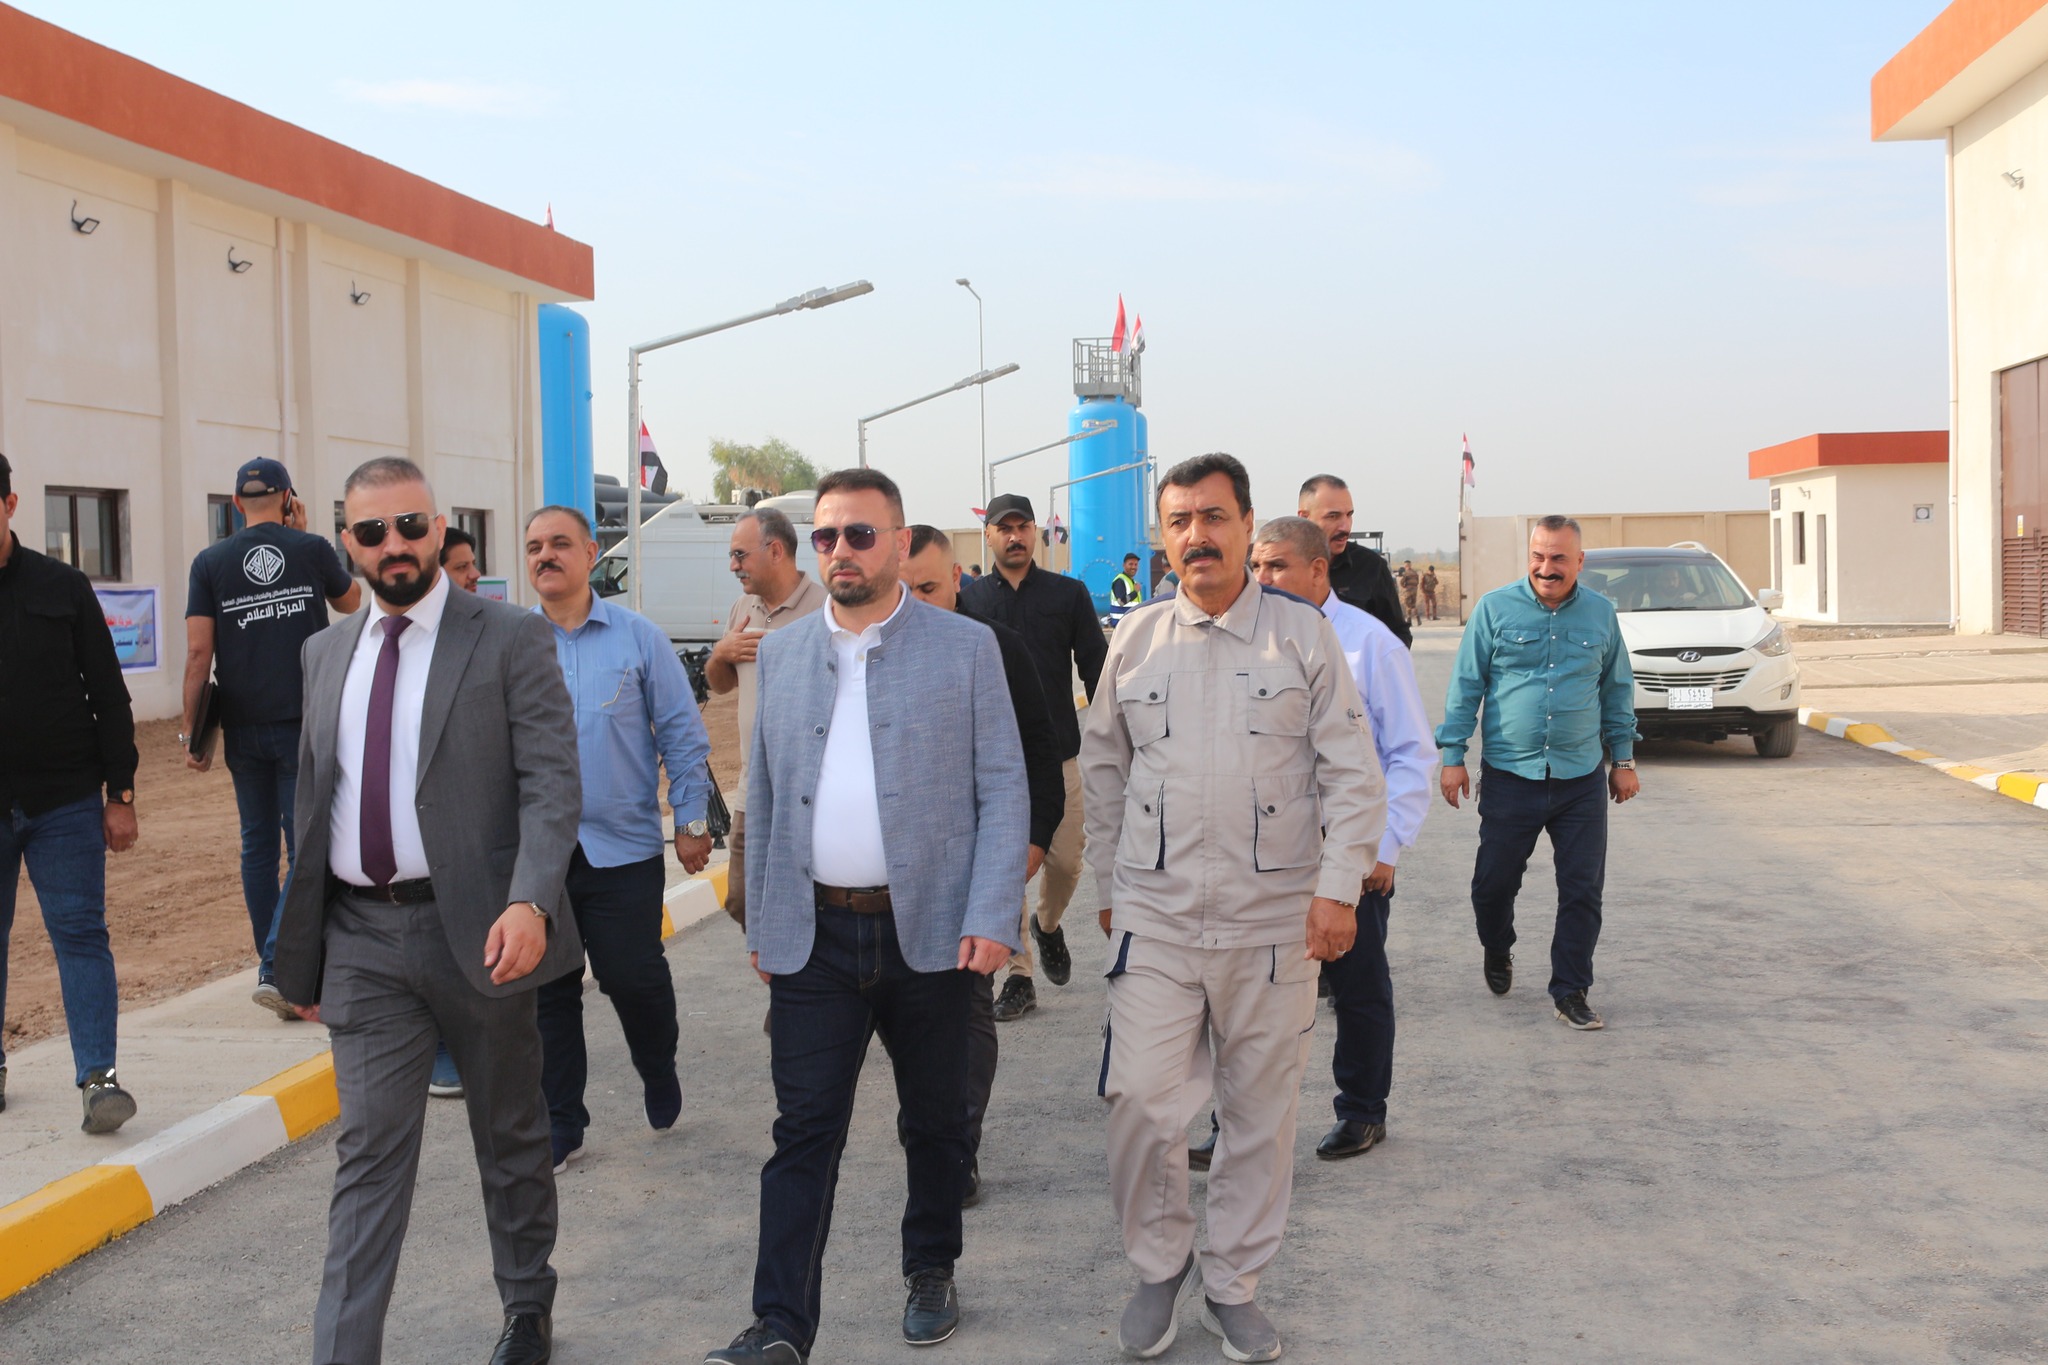 Mr. Benkin Rekani, inaugurates the Al-Dujail Water Project in Salah al-Din Governorate